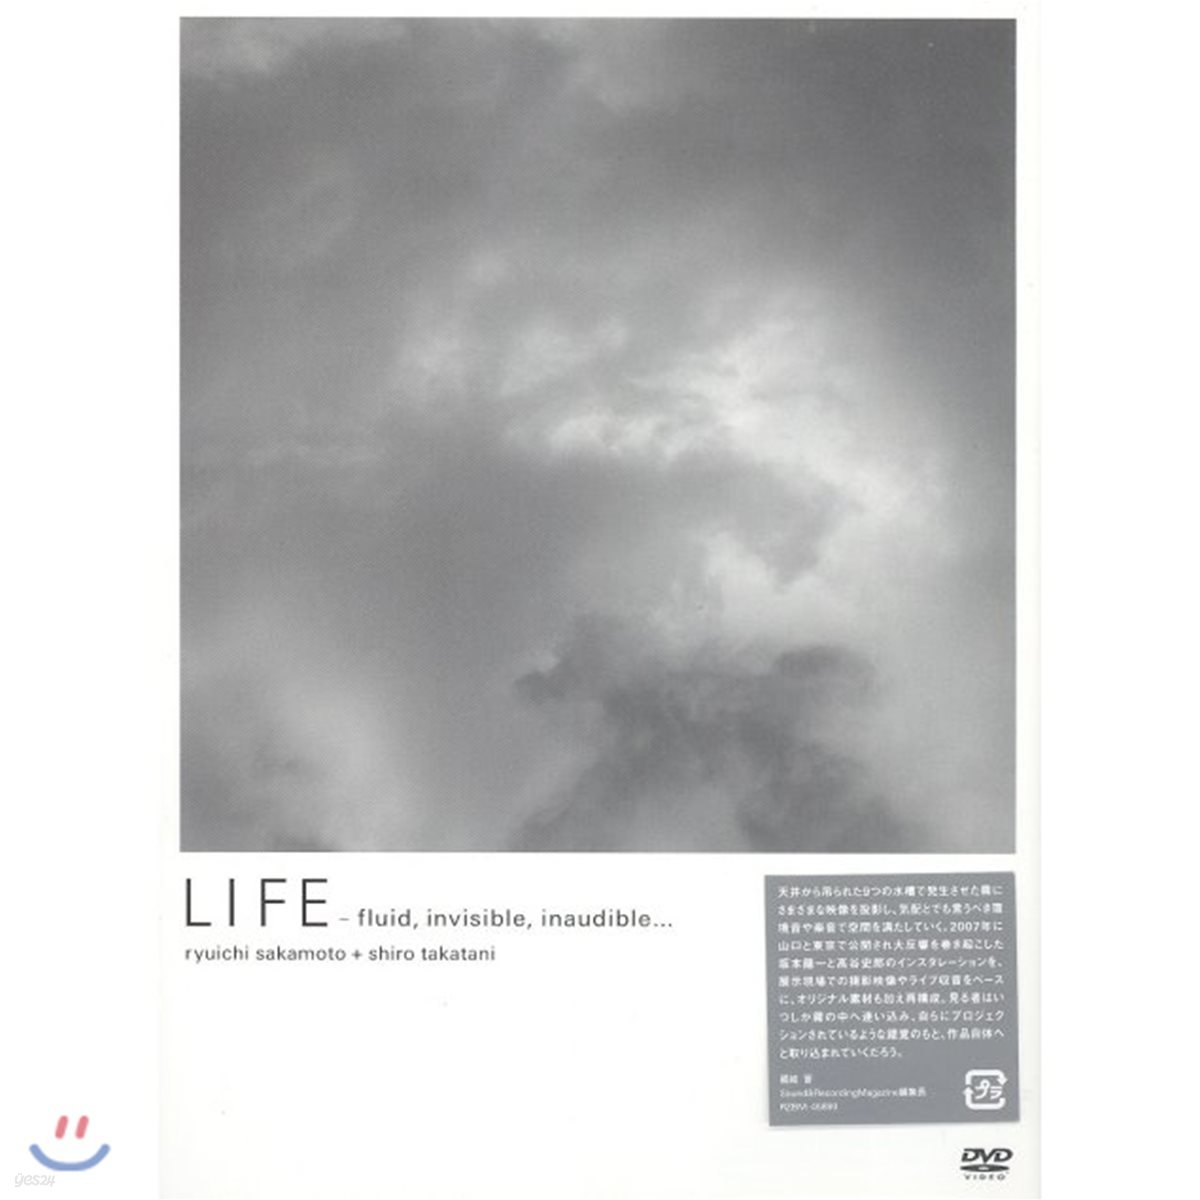 Ryuichi Sakamoto &amp; Shiro Takatani (류이치 사카모토 &amp; 타카타니 시로) - Life - fluid, invisible,inaudible... [DVD]